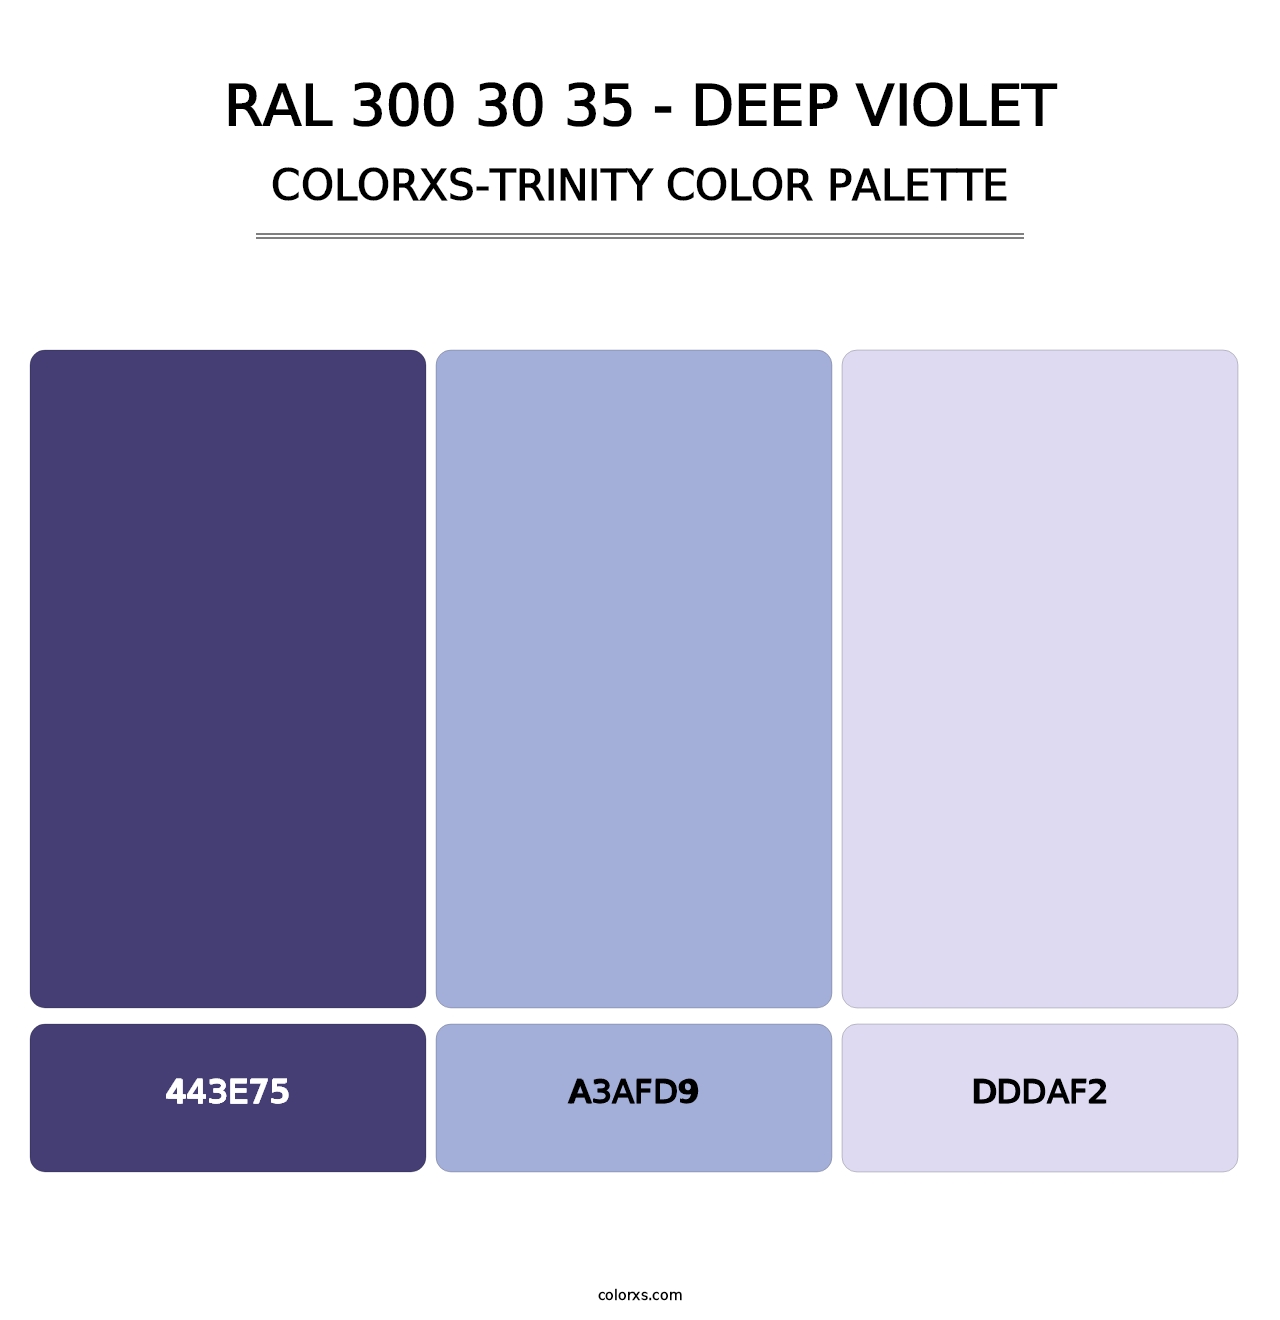 RAL 300 30 35 - Deep Violet - Colorxs Trinity Palette